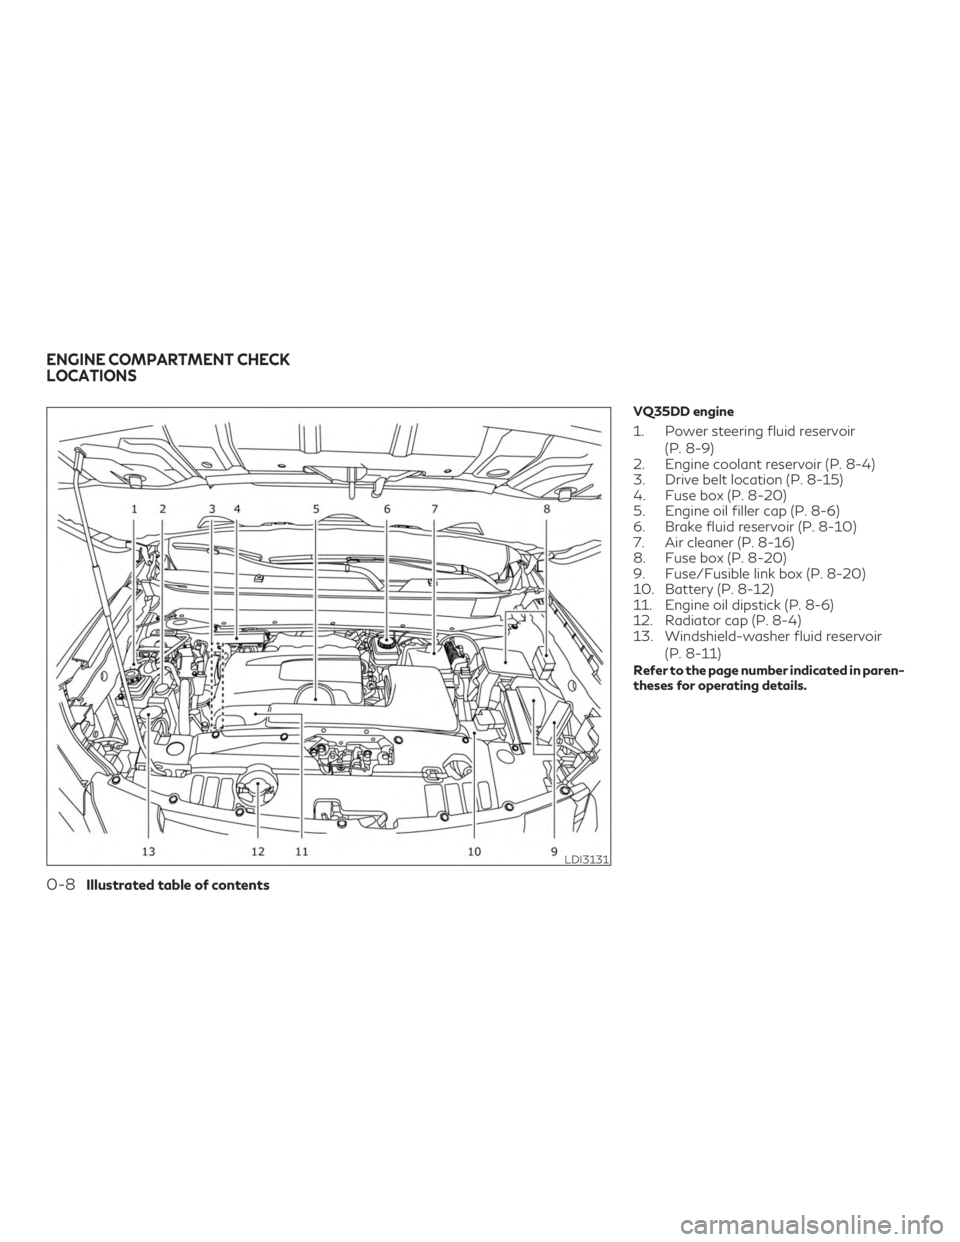 INFINITI QX60 2018  Owners Manual VQ35DD engine
1. Power steering fluid reservoir(P. 8-9)
2. Engine coolant reservoir (P. 8-4)
3. Drive belt location (P. 8-15)
4. Fuse box (P. 8-20)
5. Engine oil filler cap (P. 8-6)
6. Brake fluid res